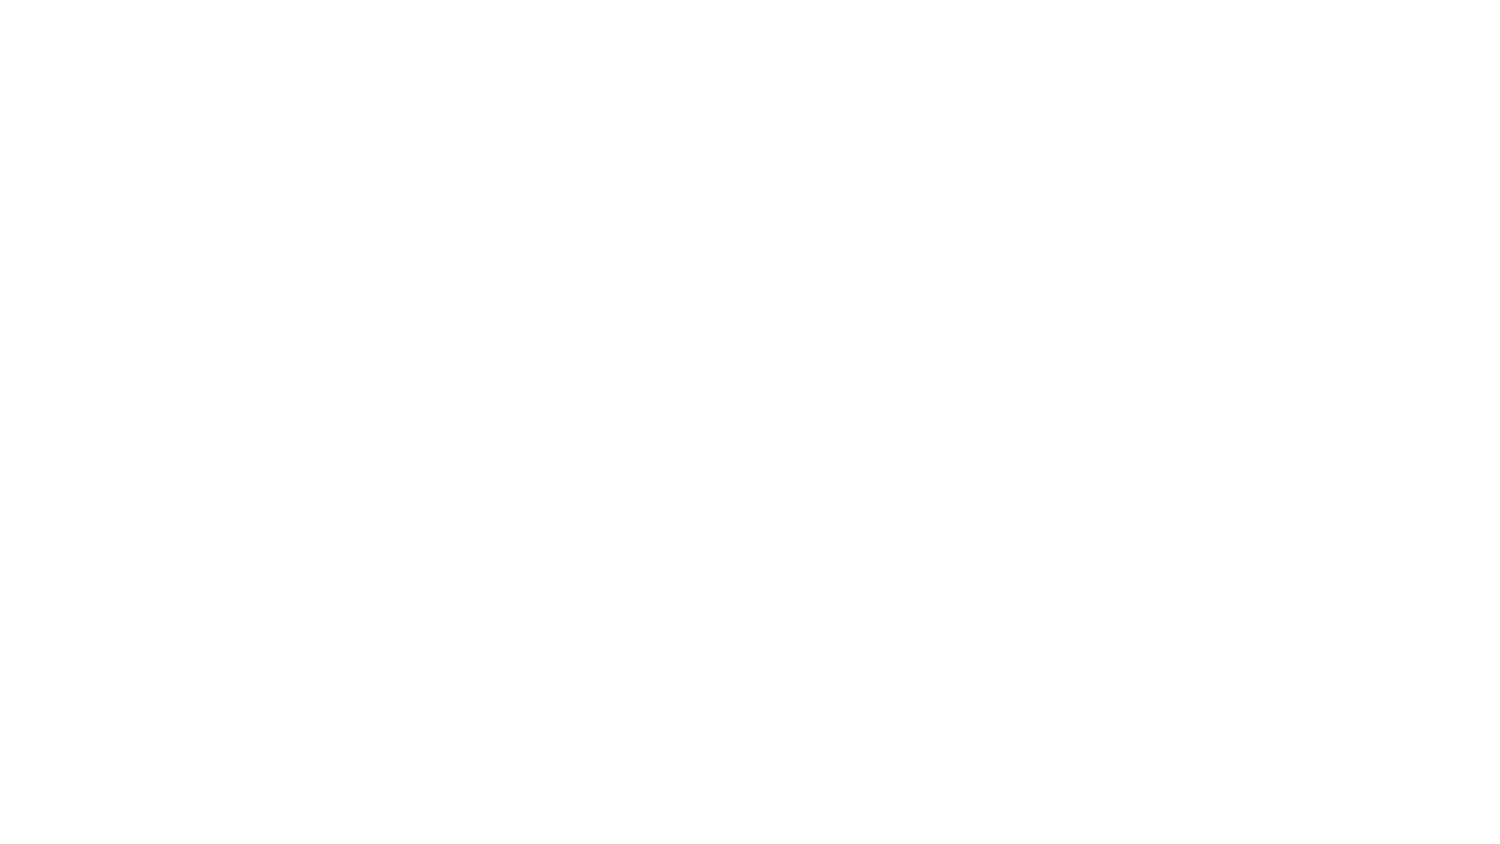 Alyce LaViolette